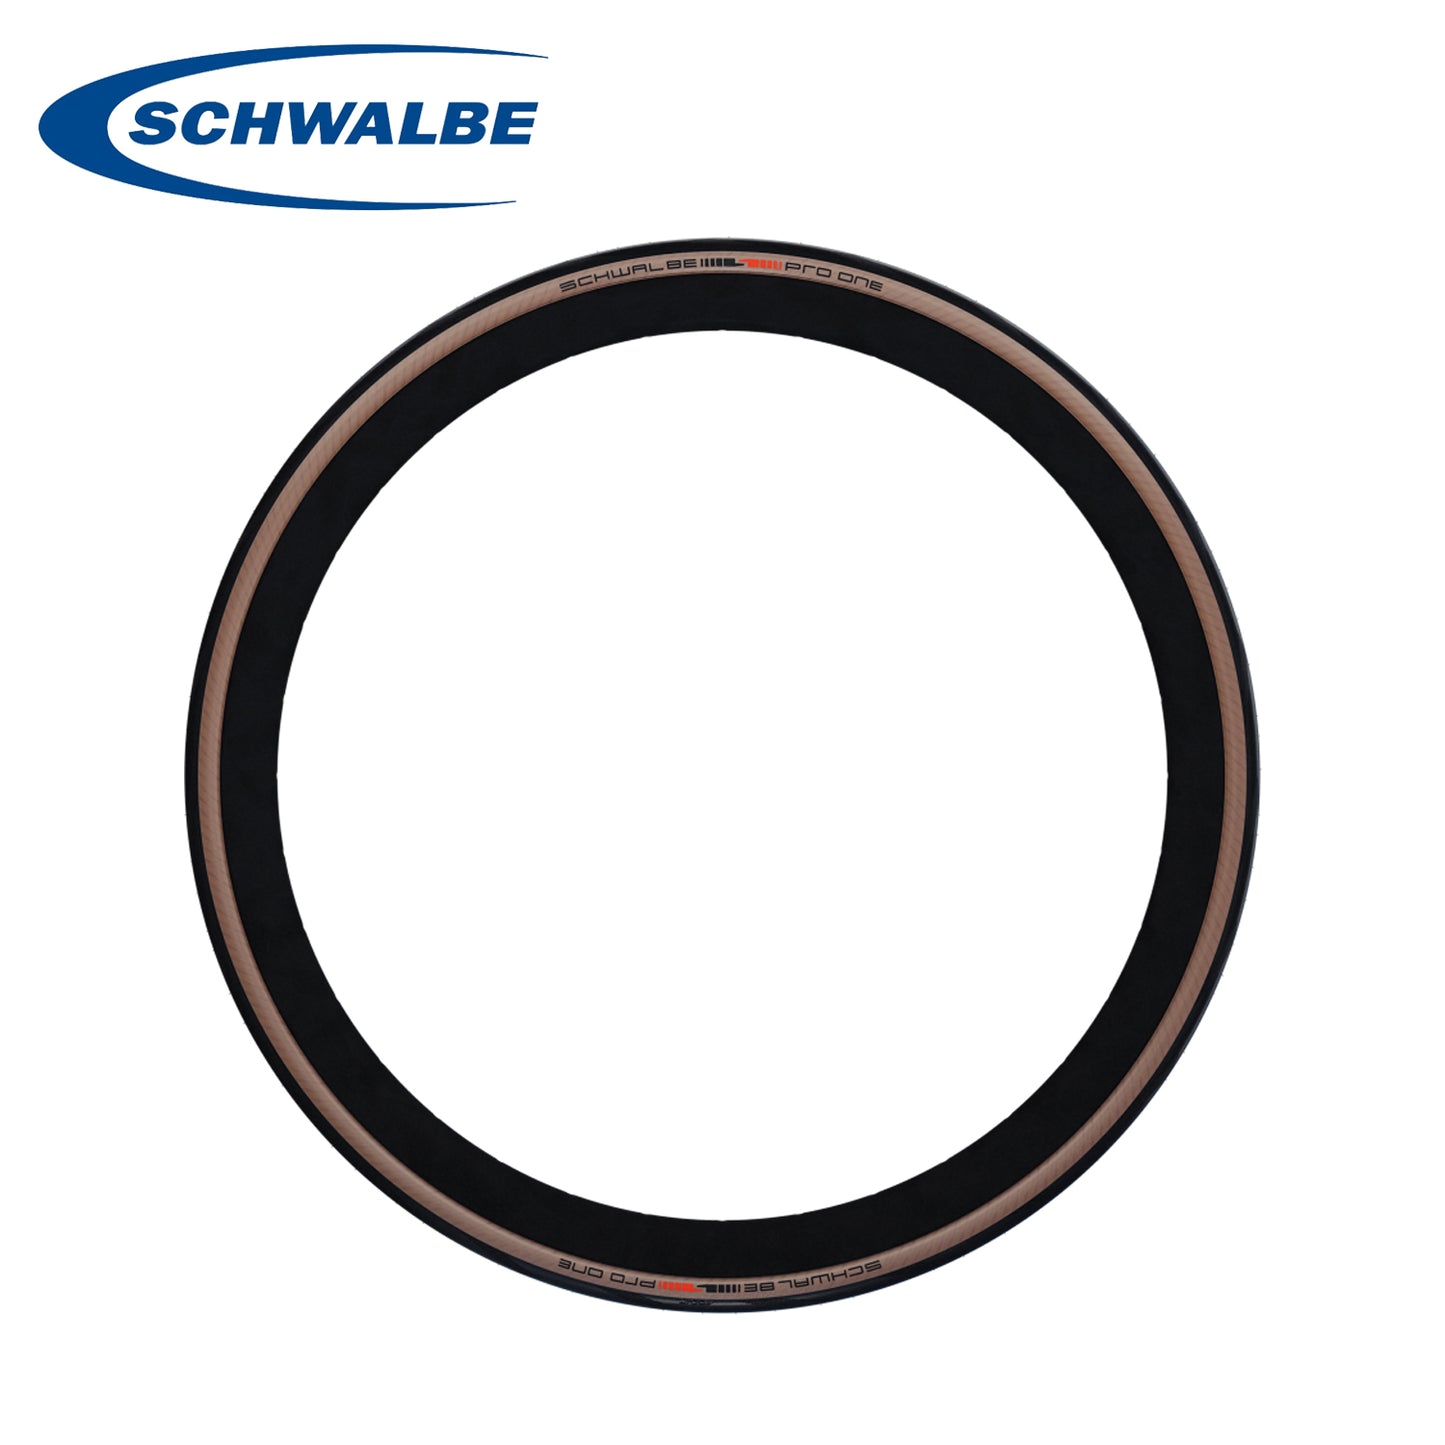 Schwalbe PRO ONE Evolution TLE Tubeless Road Bike Tire - Black/Beige